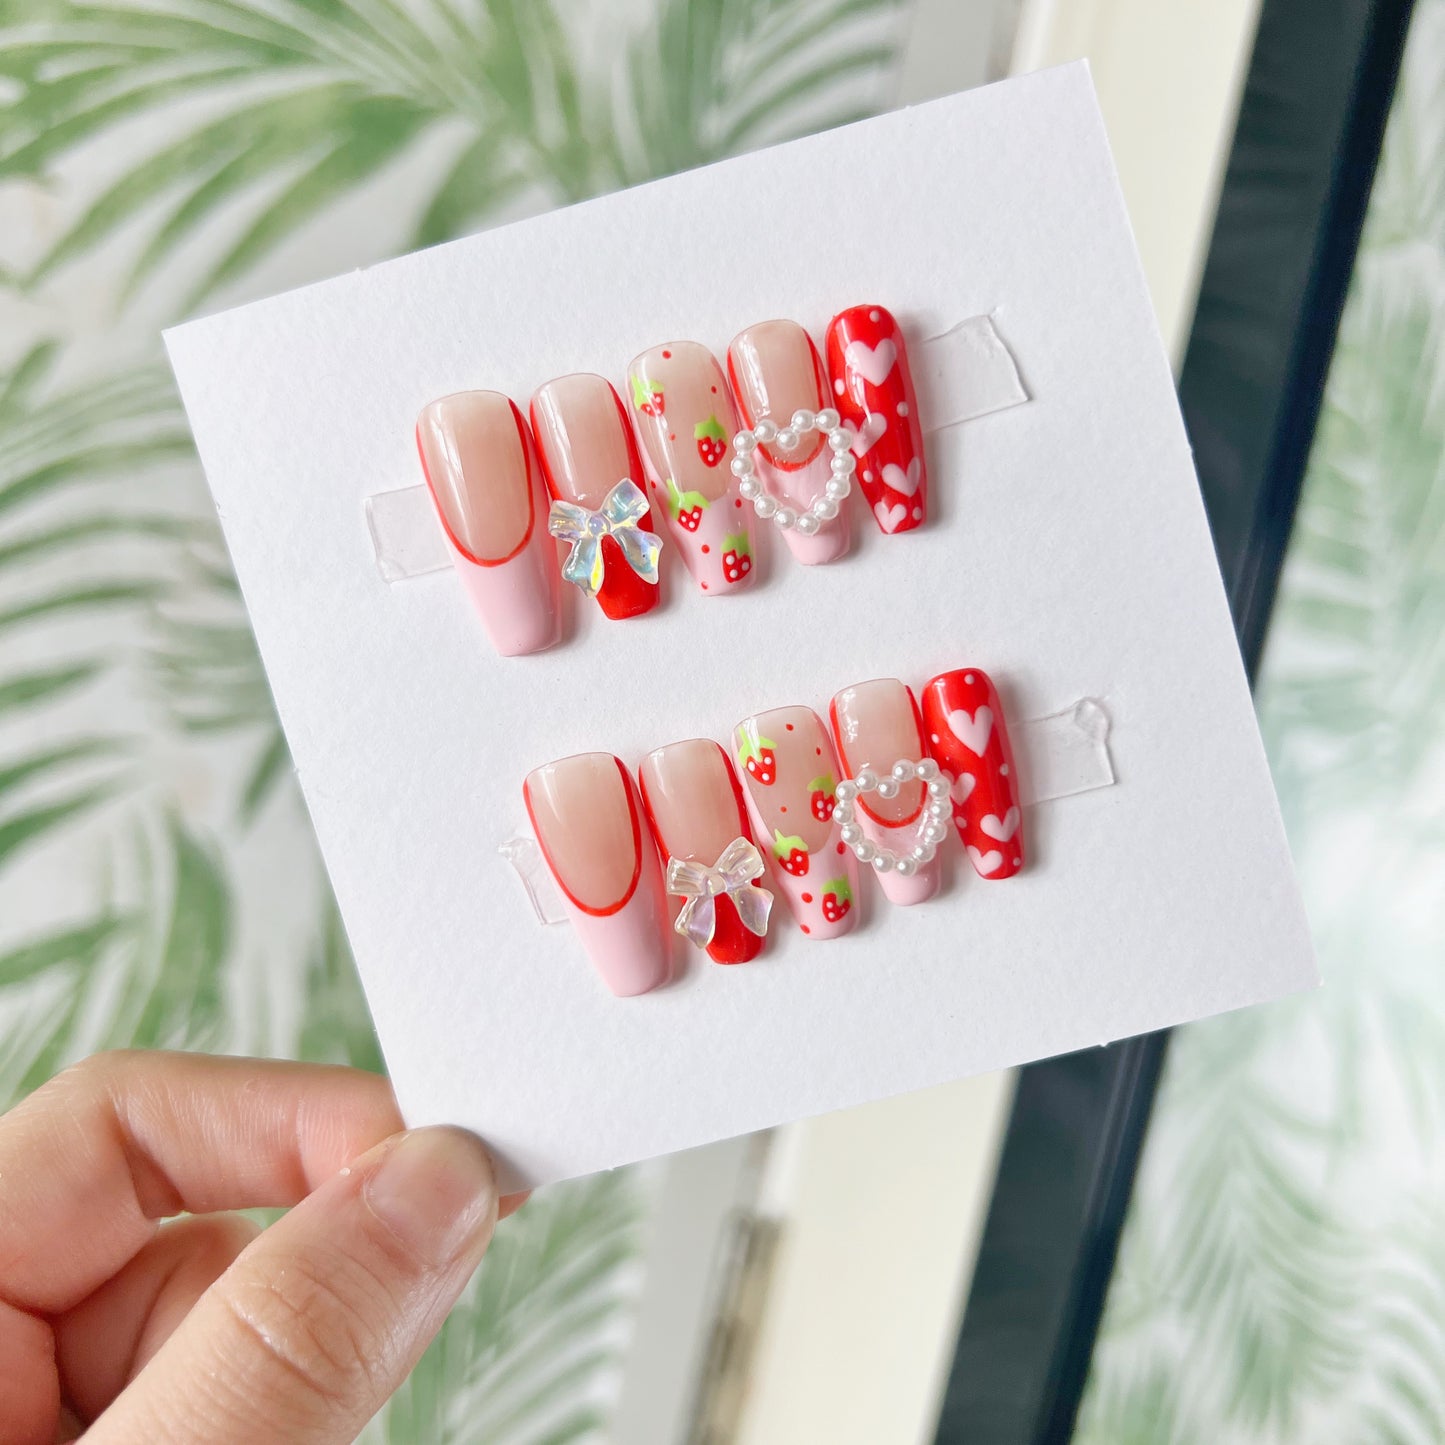 Strawberries, bows and hearts Acrylic Press on nails